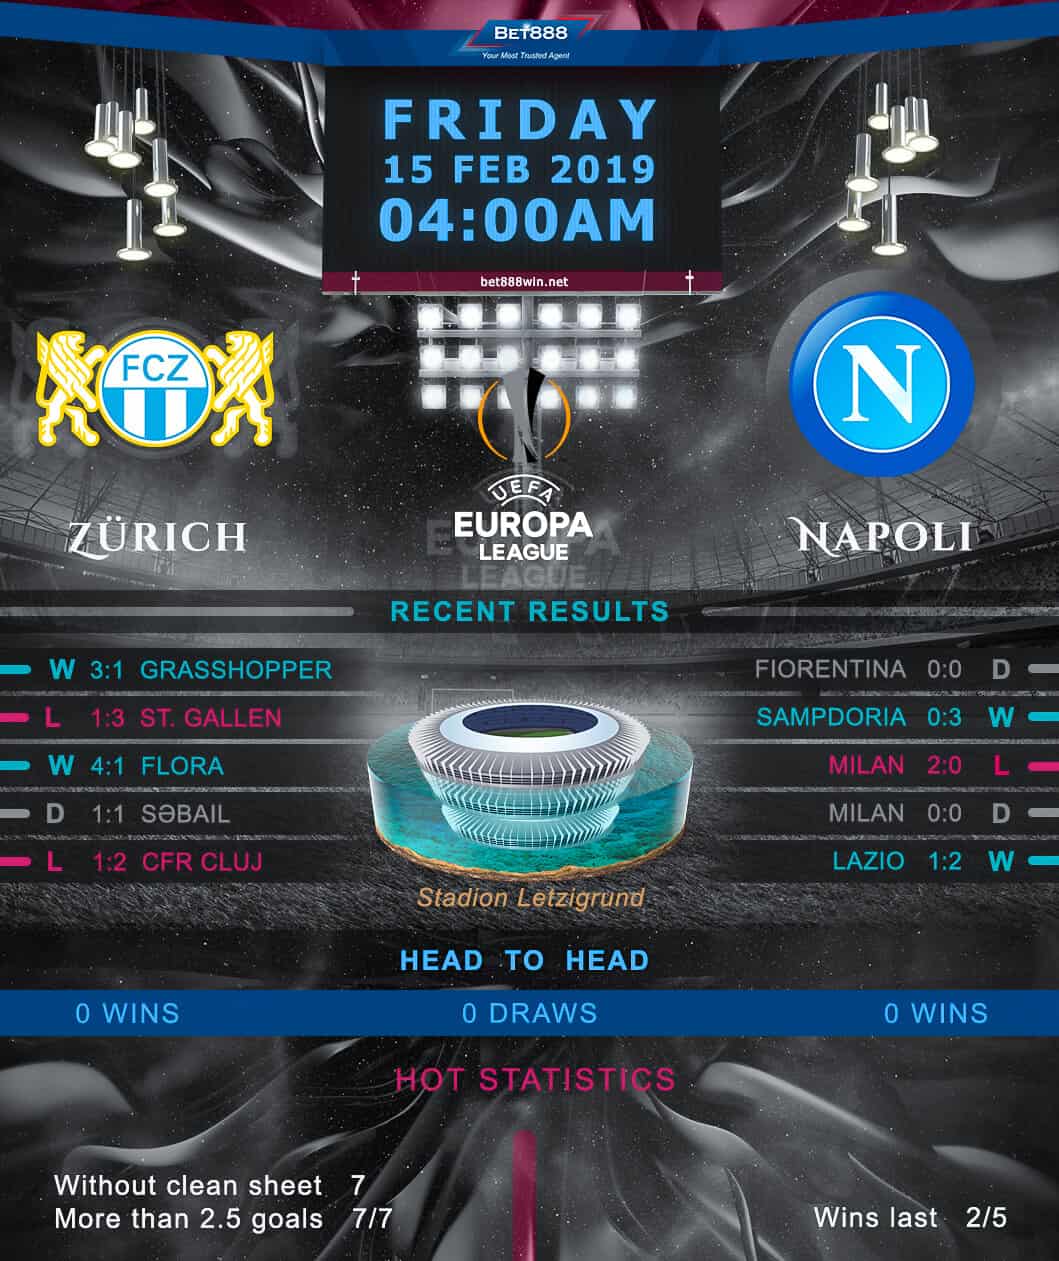 Zurich vs Napoli﻿ 15/02/19